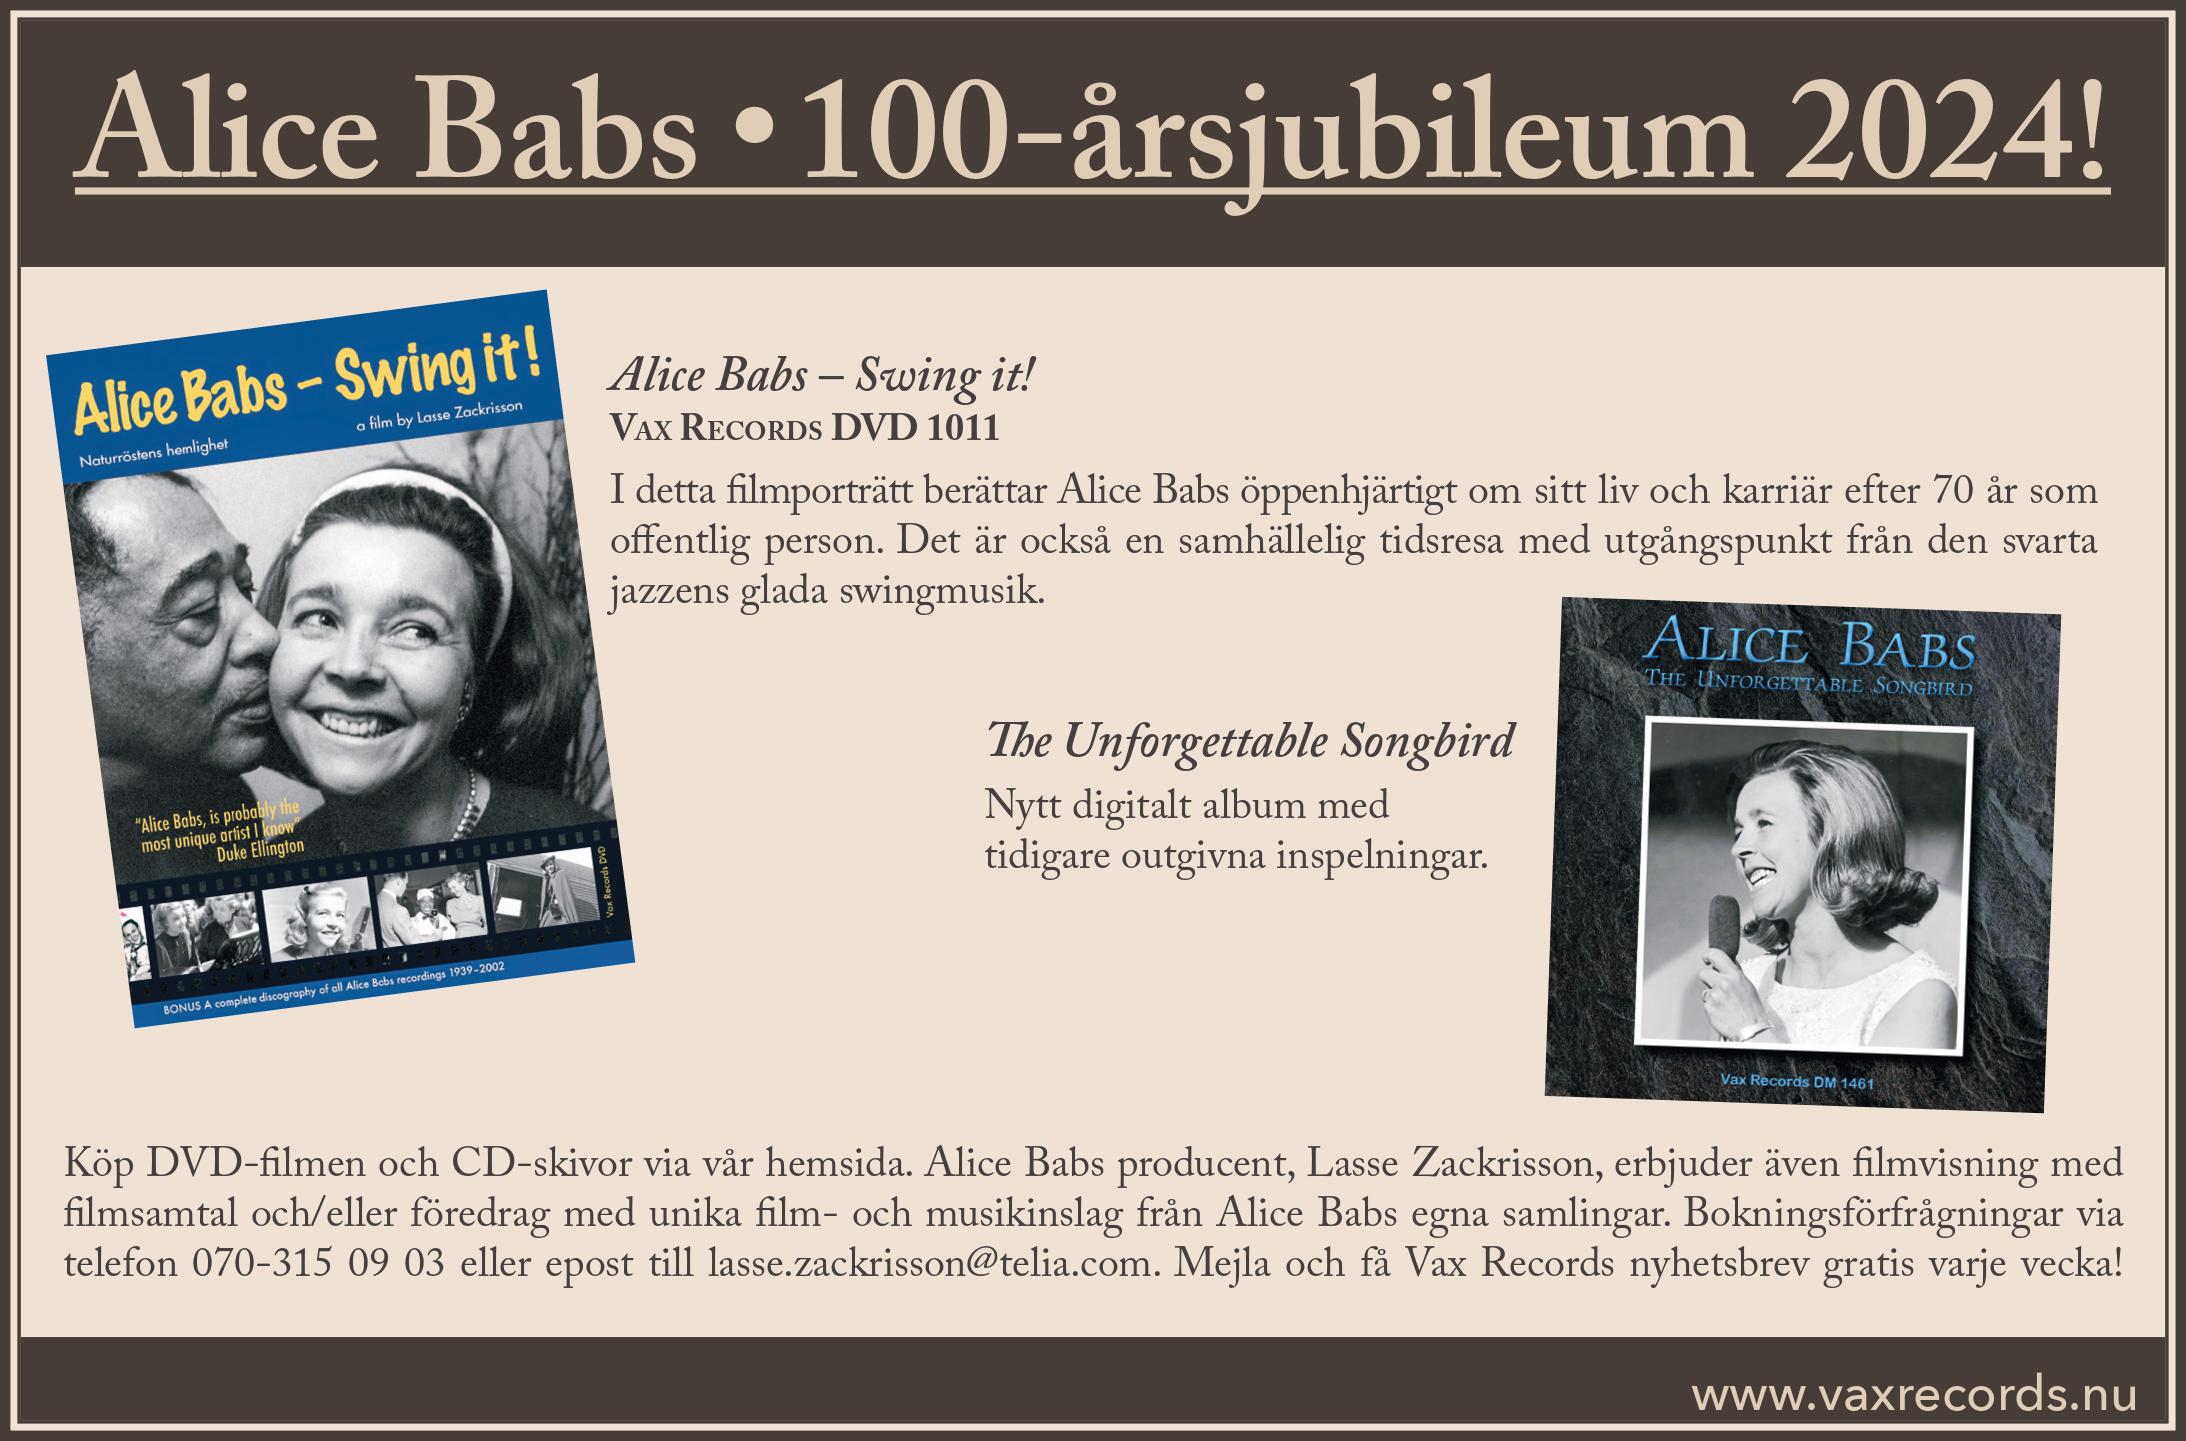 Annons: Alice Babs. 100-årsjubileum 2024